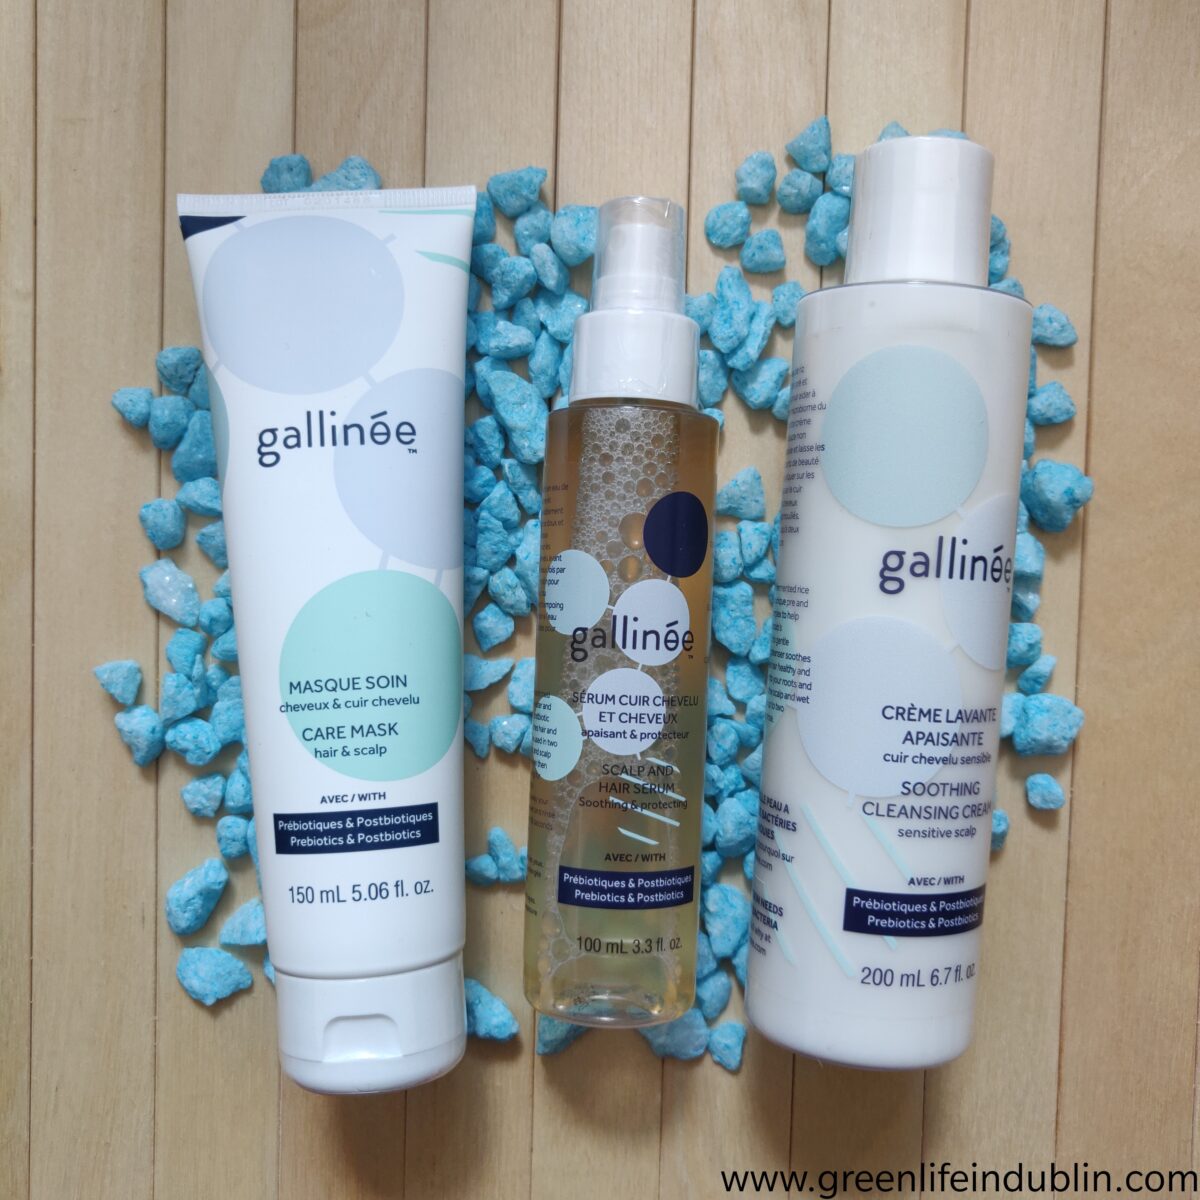 Gallinee Prebiotic Probiotic Haircare Review [AD]